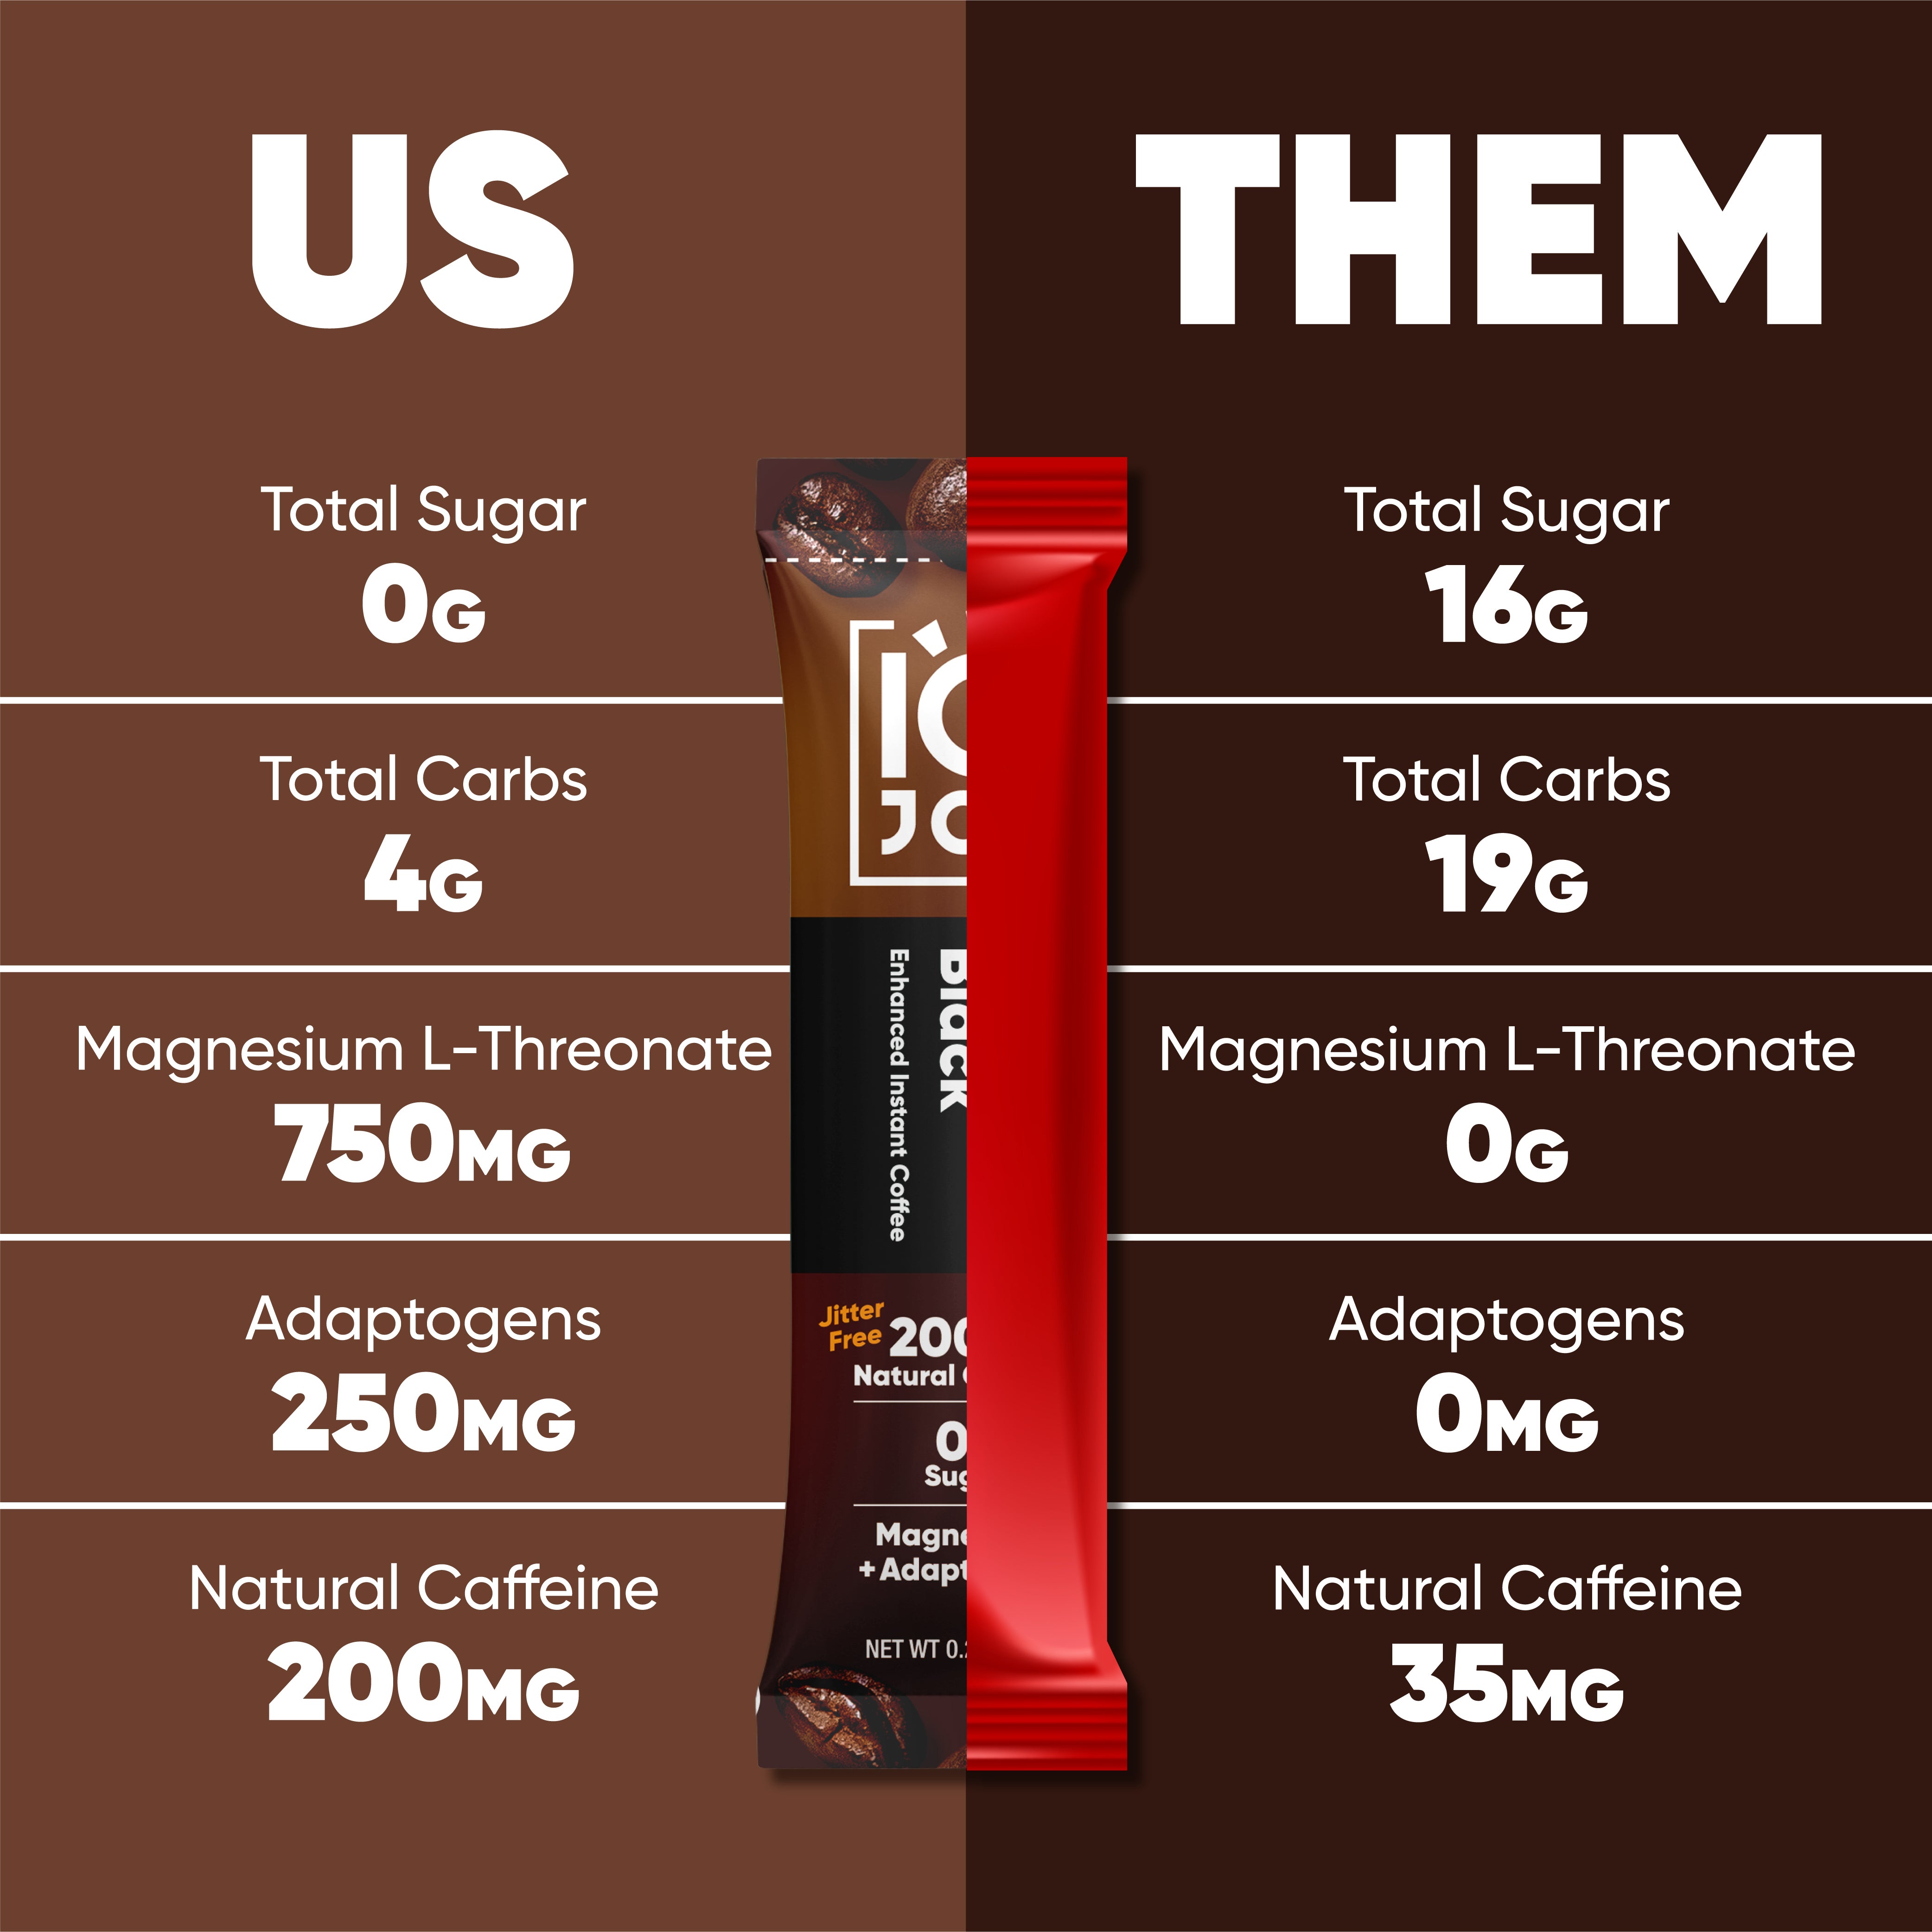 IQJOE SAMPLER is the Best Mushroom Coffee. 0G Sugar, 4G Carbs, 750mg Magesium L-Threonate, 250mg Adaptogens, 200mg of Caffeine.